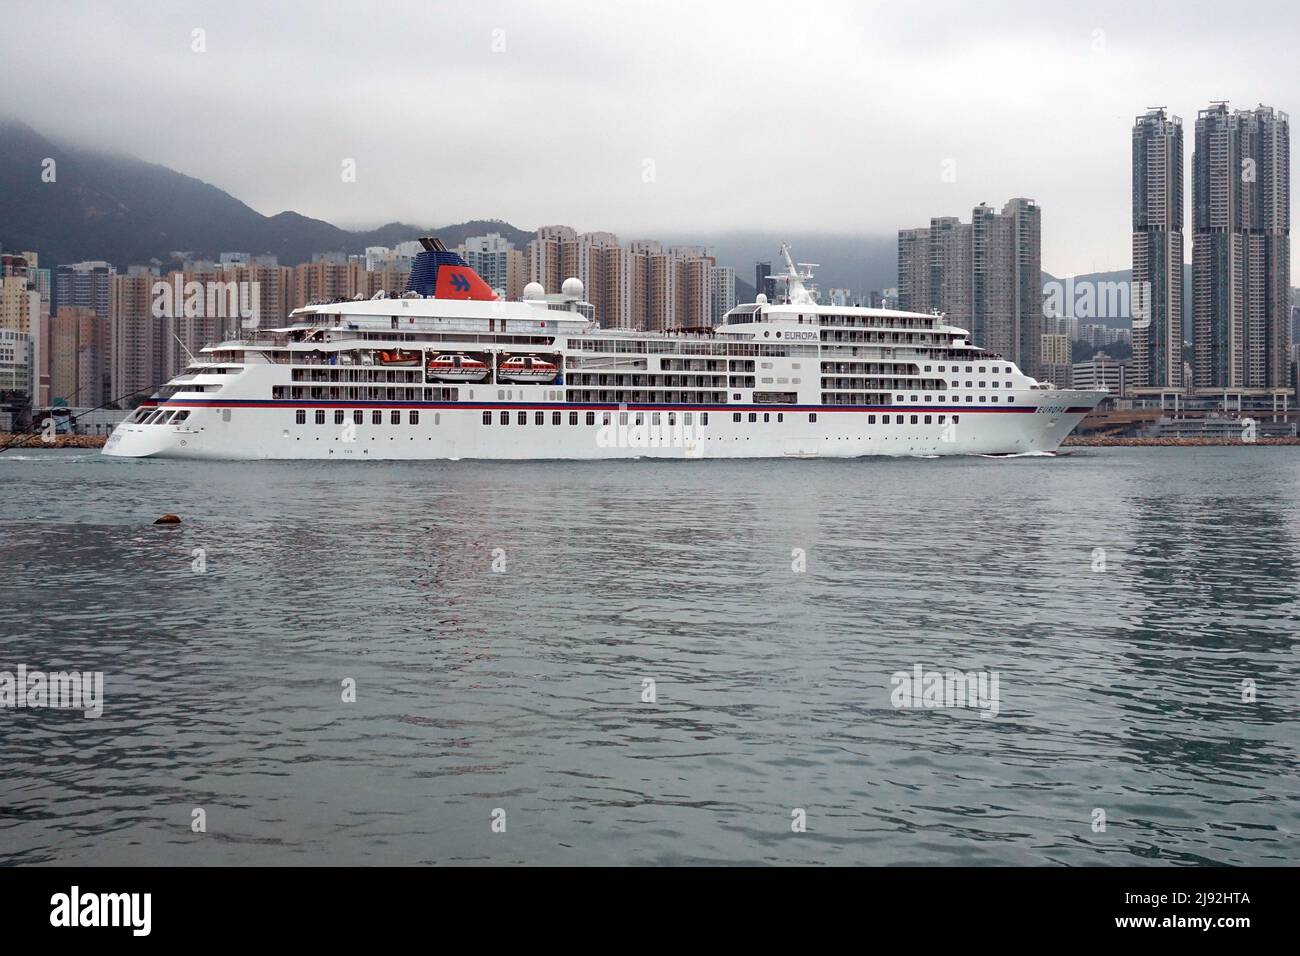 24.03.2019, Hongkong, Hongkong, China - das Schiff MS Europa vor der Skyline. 00S190324D468CAROEX.JPG [MODELLVERSION: NEIN, EIGENTUMSFREIGABE: Stockfoto